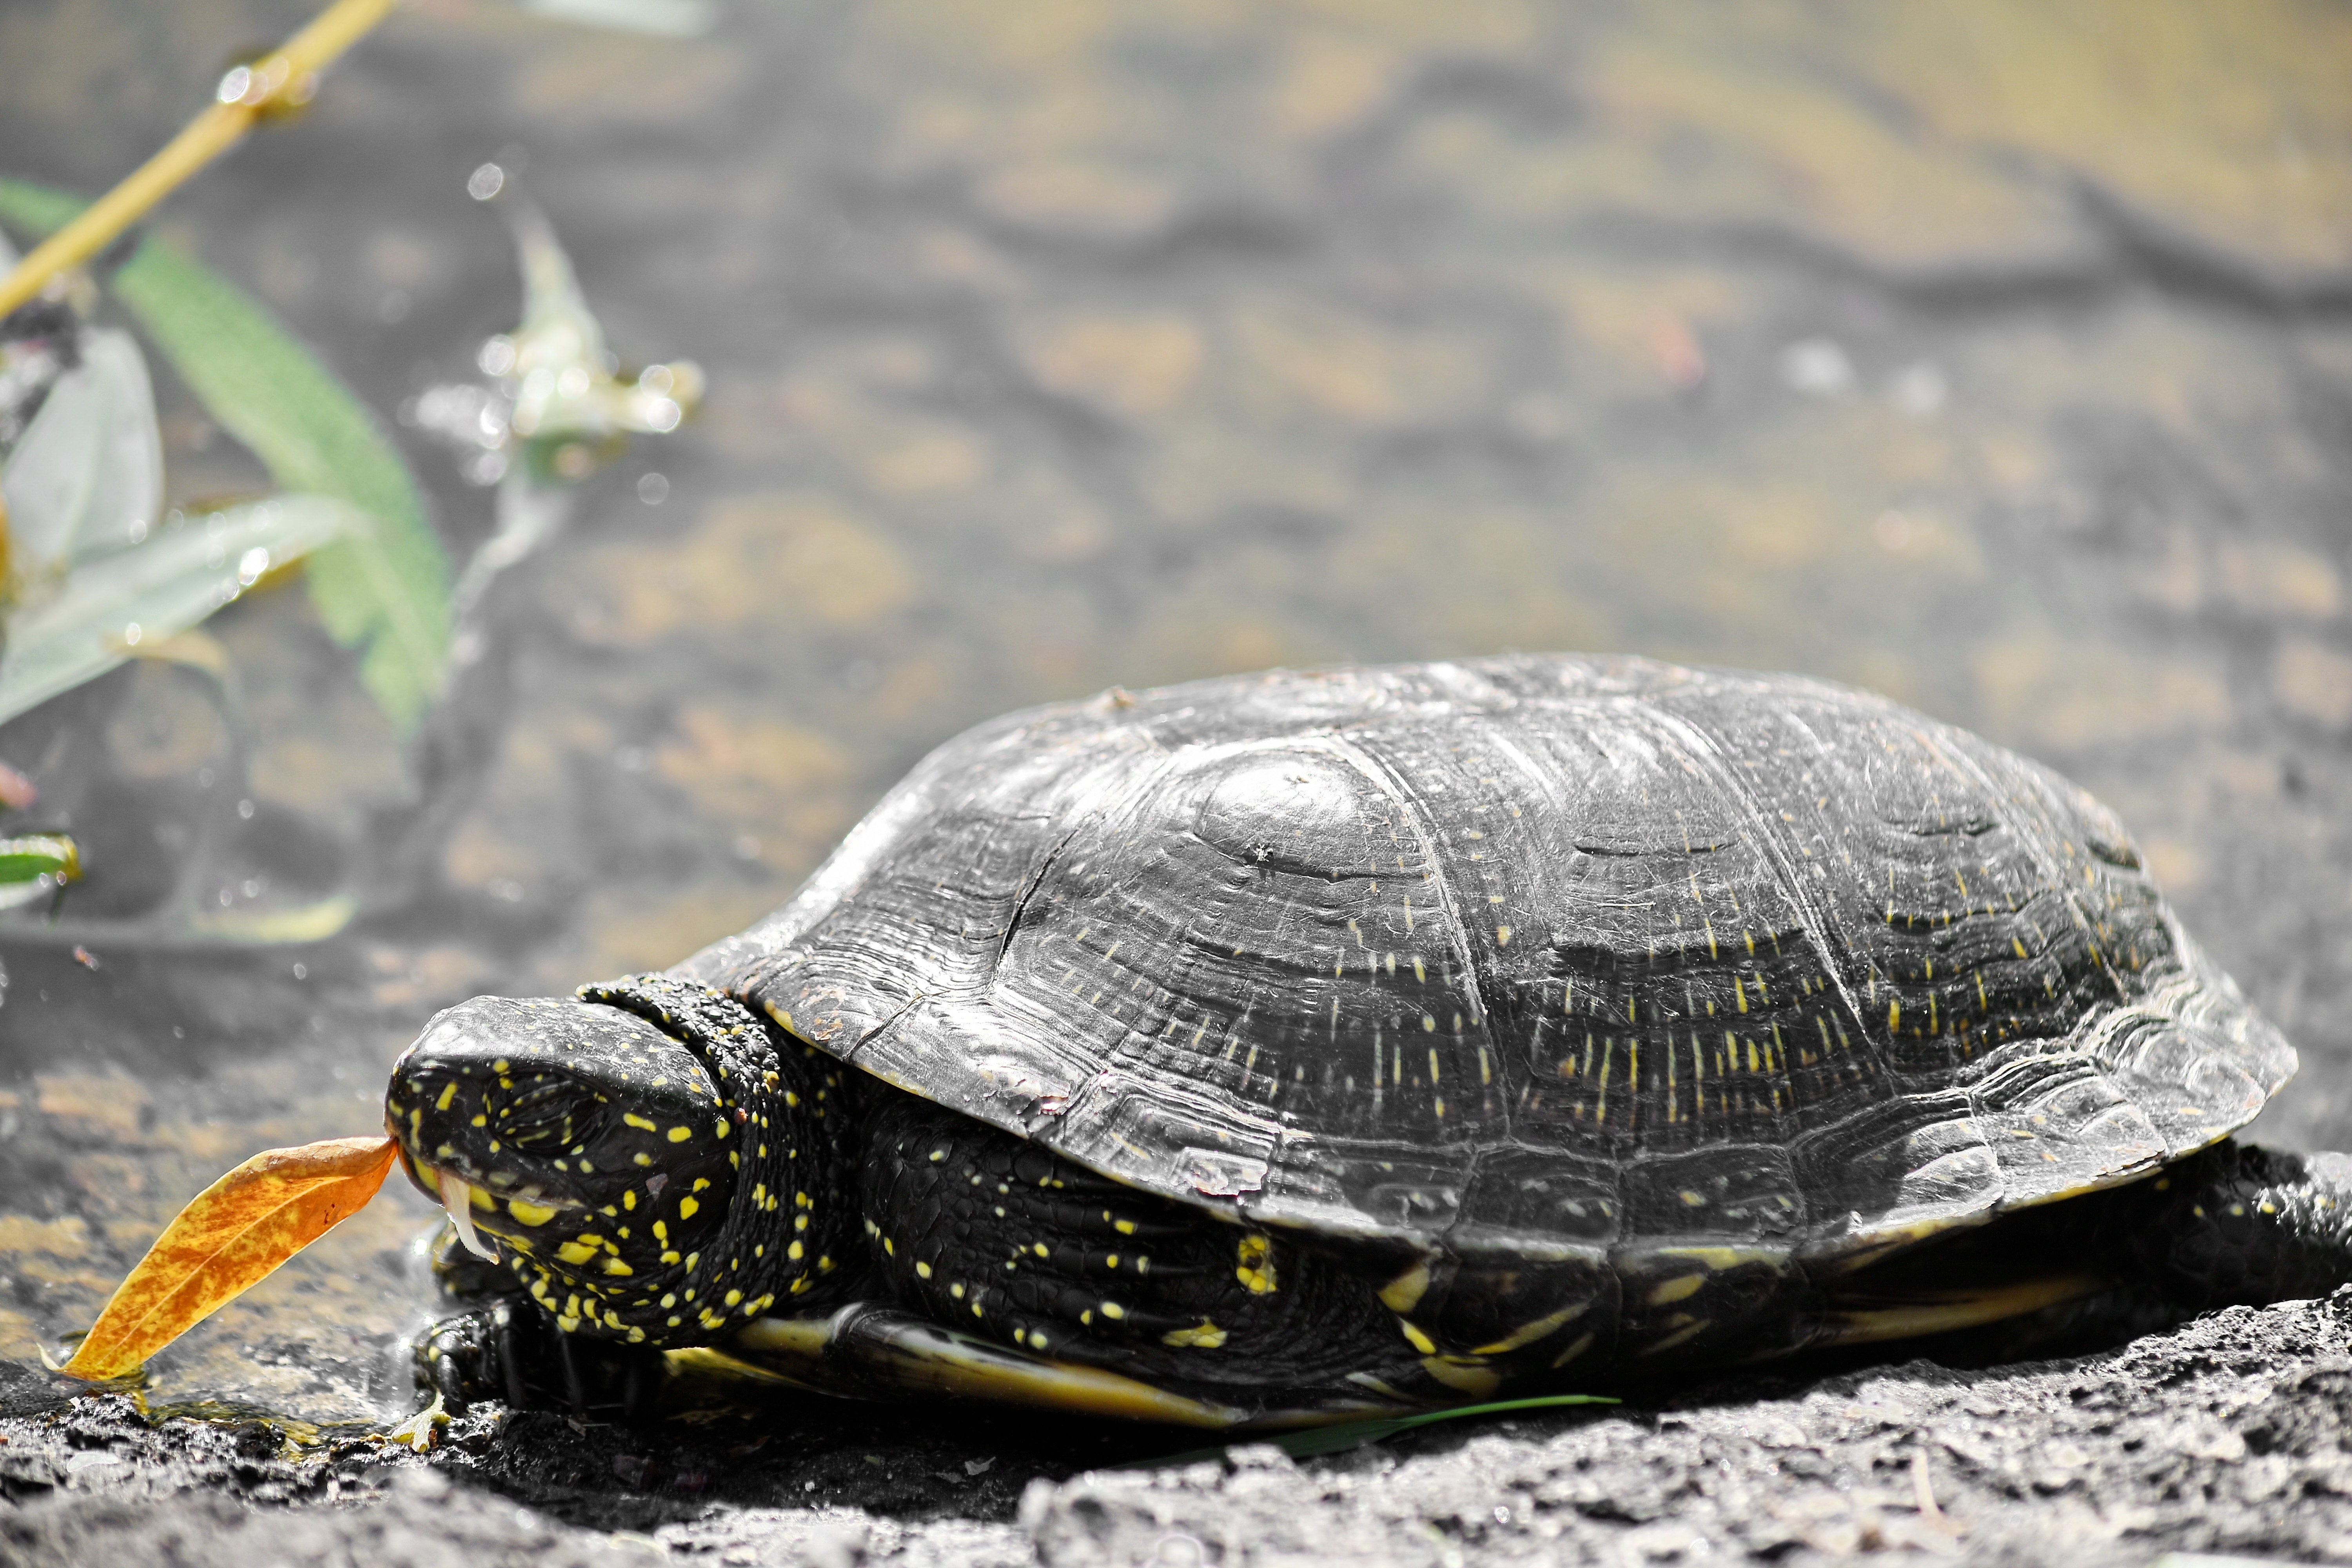 Значение черепахи в природе и жизни человека. Речная черепаха. Черепаха в воде. Черепаха роль в природе. Природа, животное, черепаха.